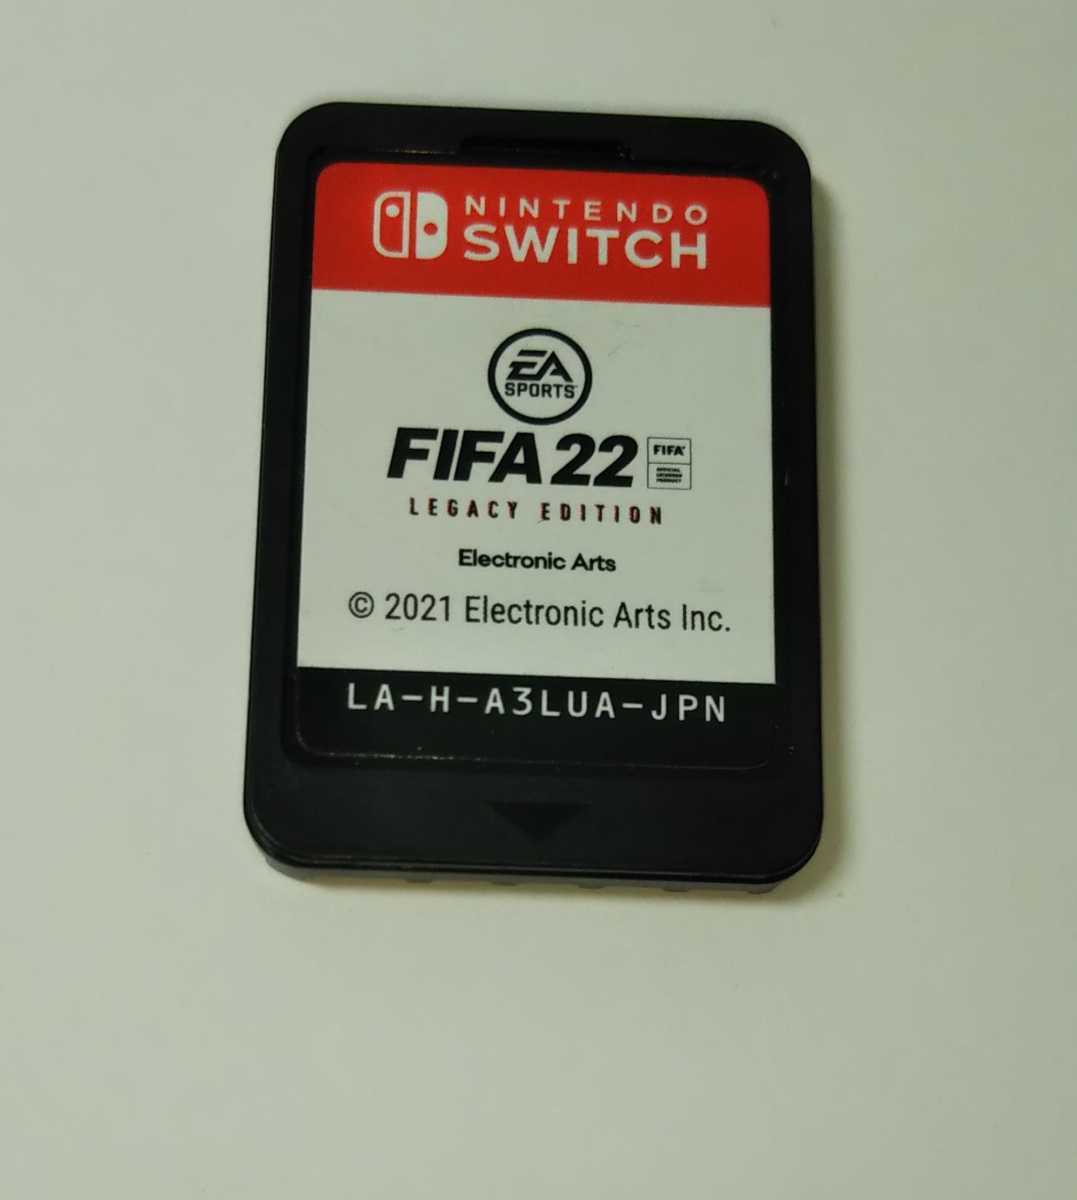 Fifa 22 Legacy Edition フィファ22 サッカー Nintendo Switch ニンテンドー スイッチ ソフトのみ 任天堂 ニンテンドースイッチソフト 売買されたオークション情報 Yahooの商品情報をアーカイブ公開 オークファン Aucfan Com